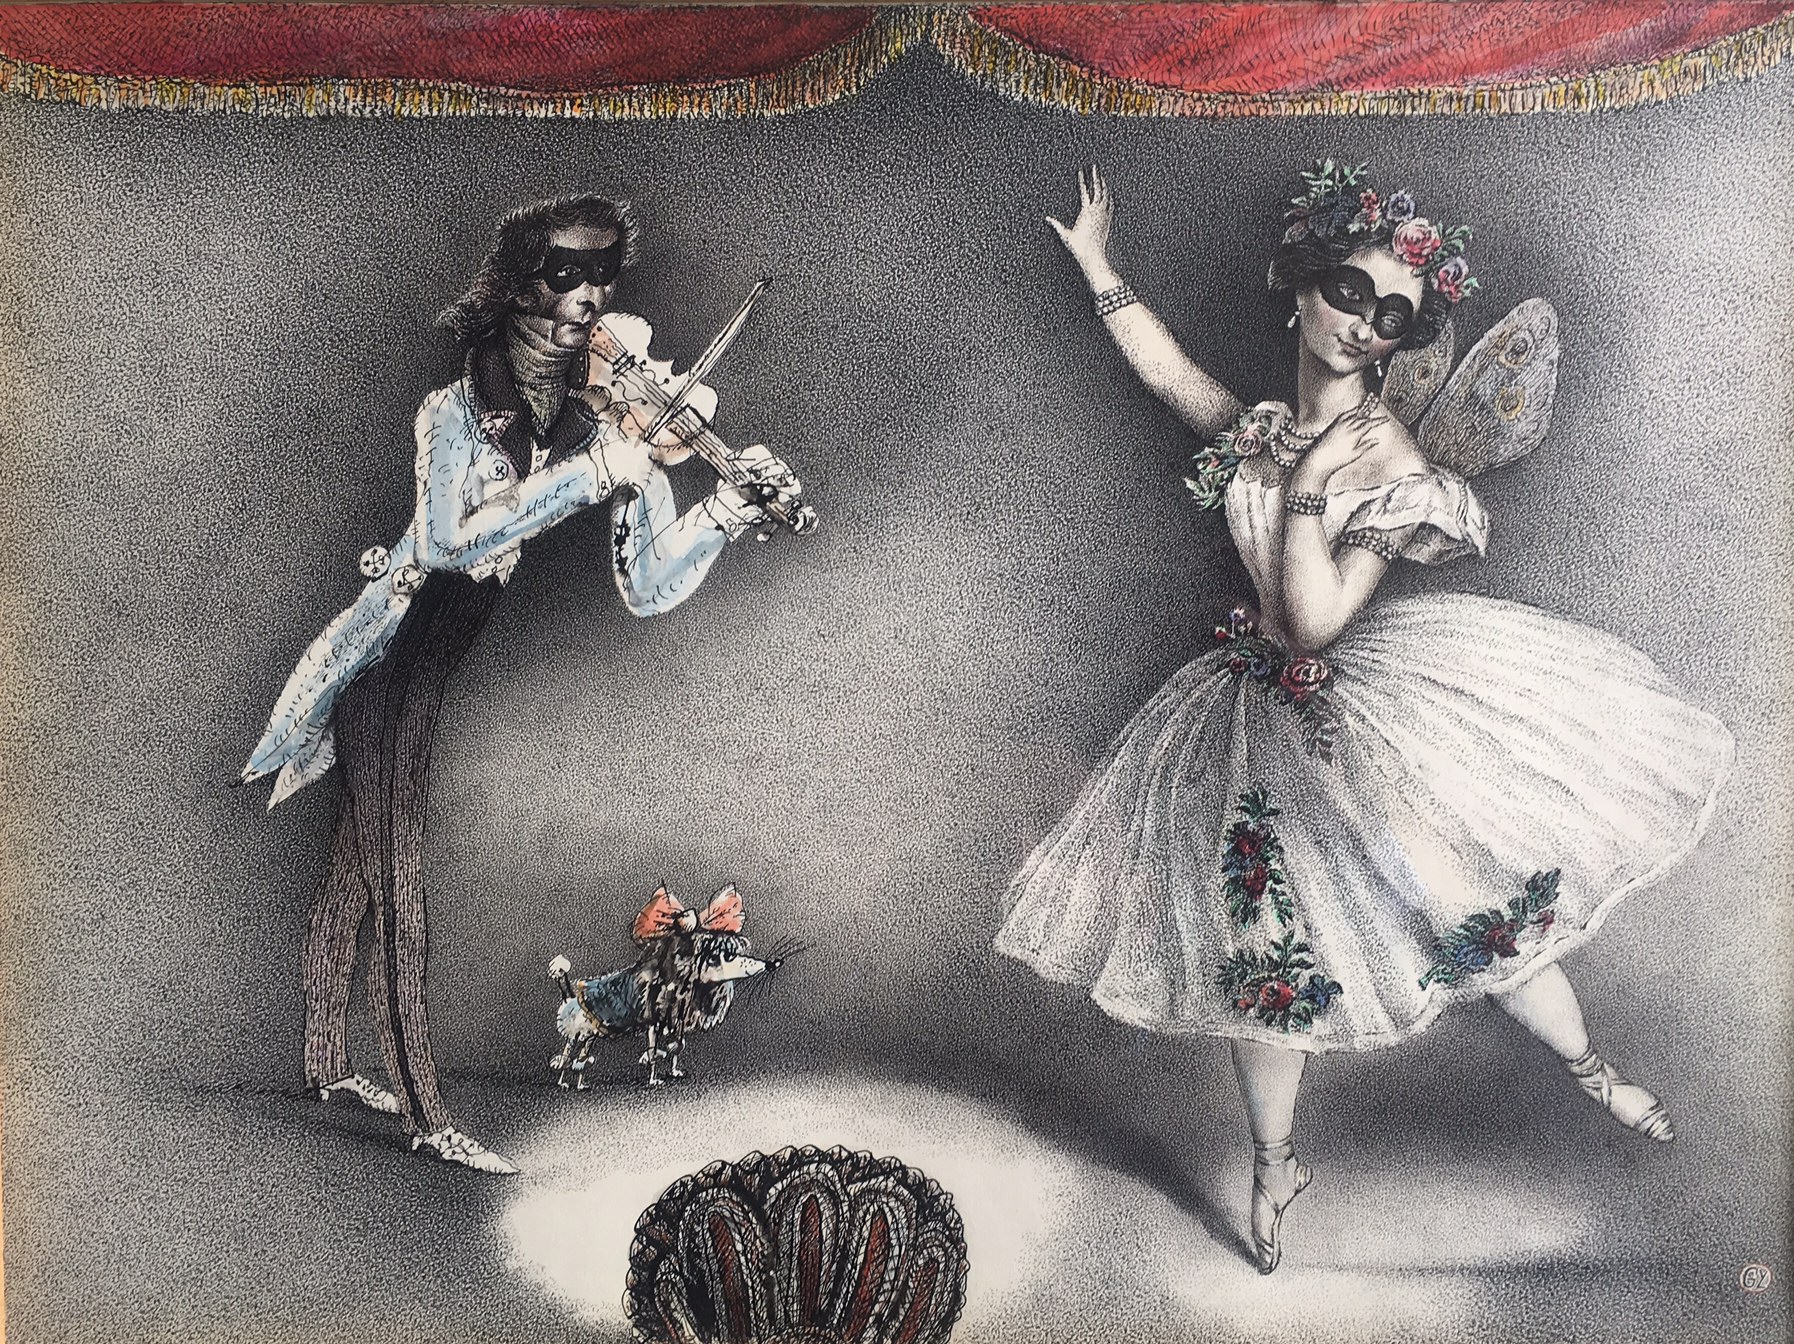 Gyulai, Líviusz: Dancer with violin